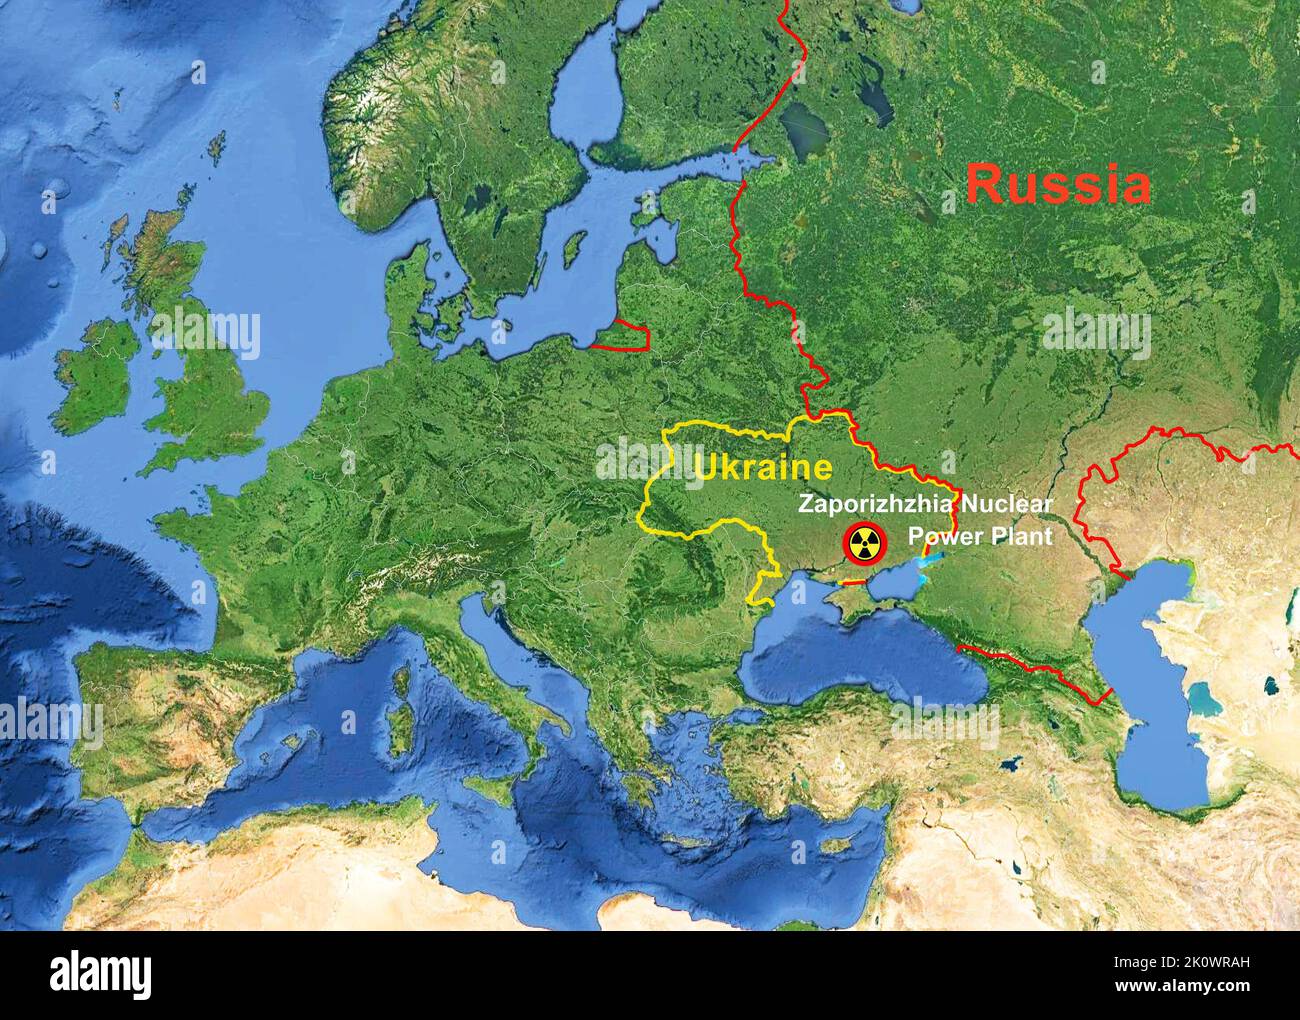 Zaporizhzhia Nuclear Power Plant in Ukraine on Europe map, hot spot of Russia-Ukraine war. Theme of Zaporizhzhia station, map, border, World crisis an Stock Photo